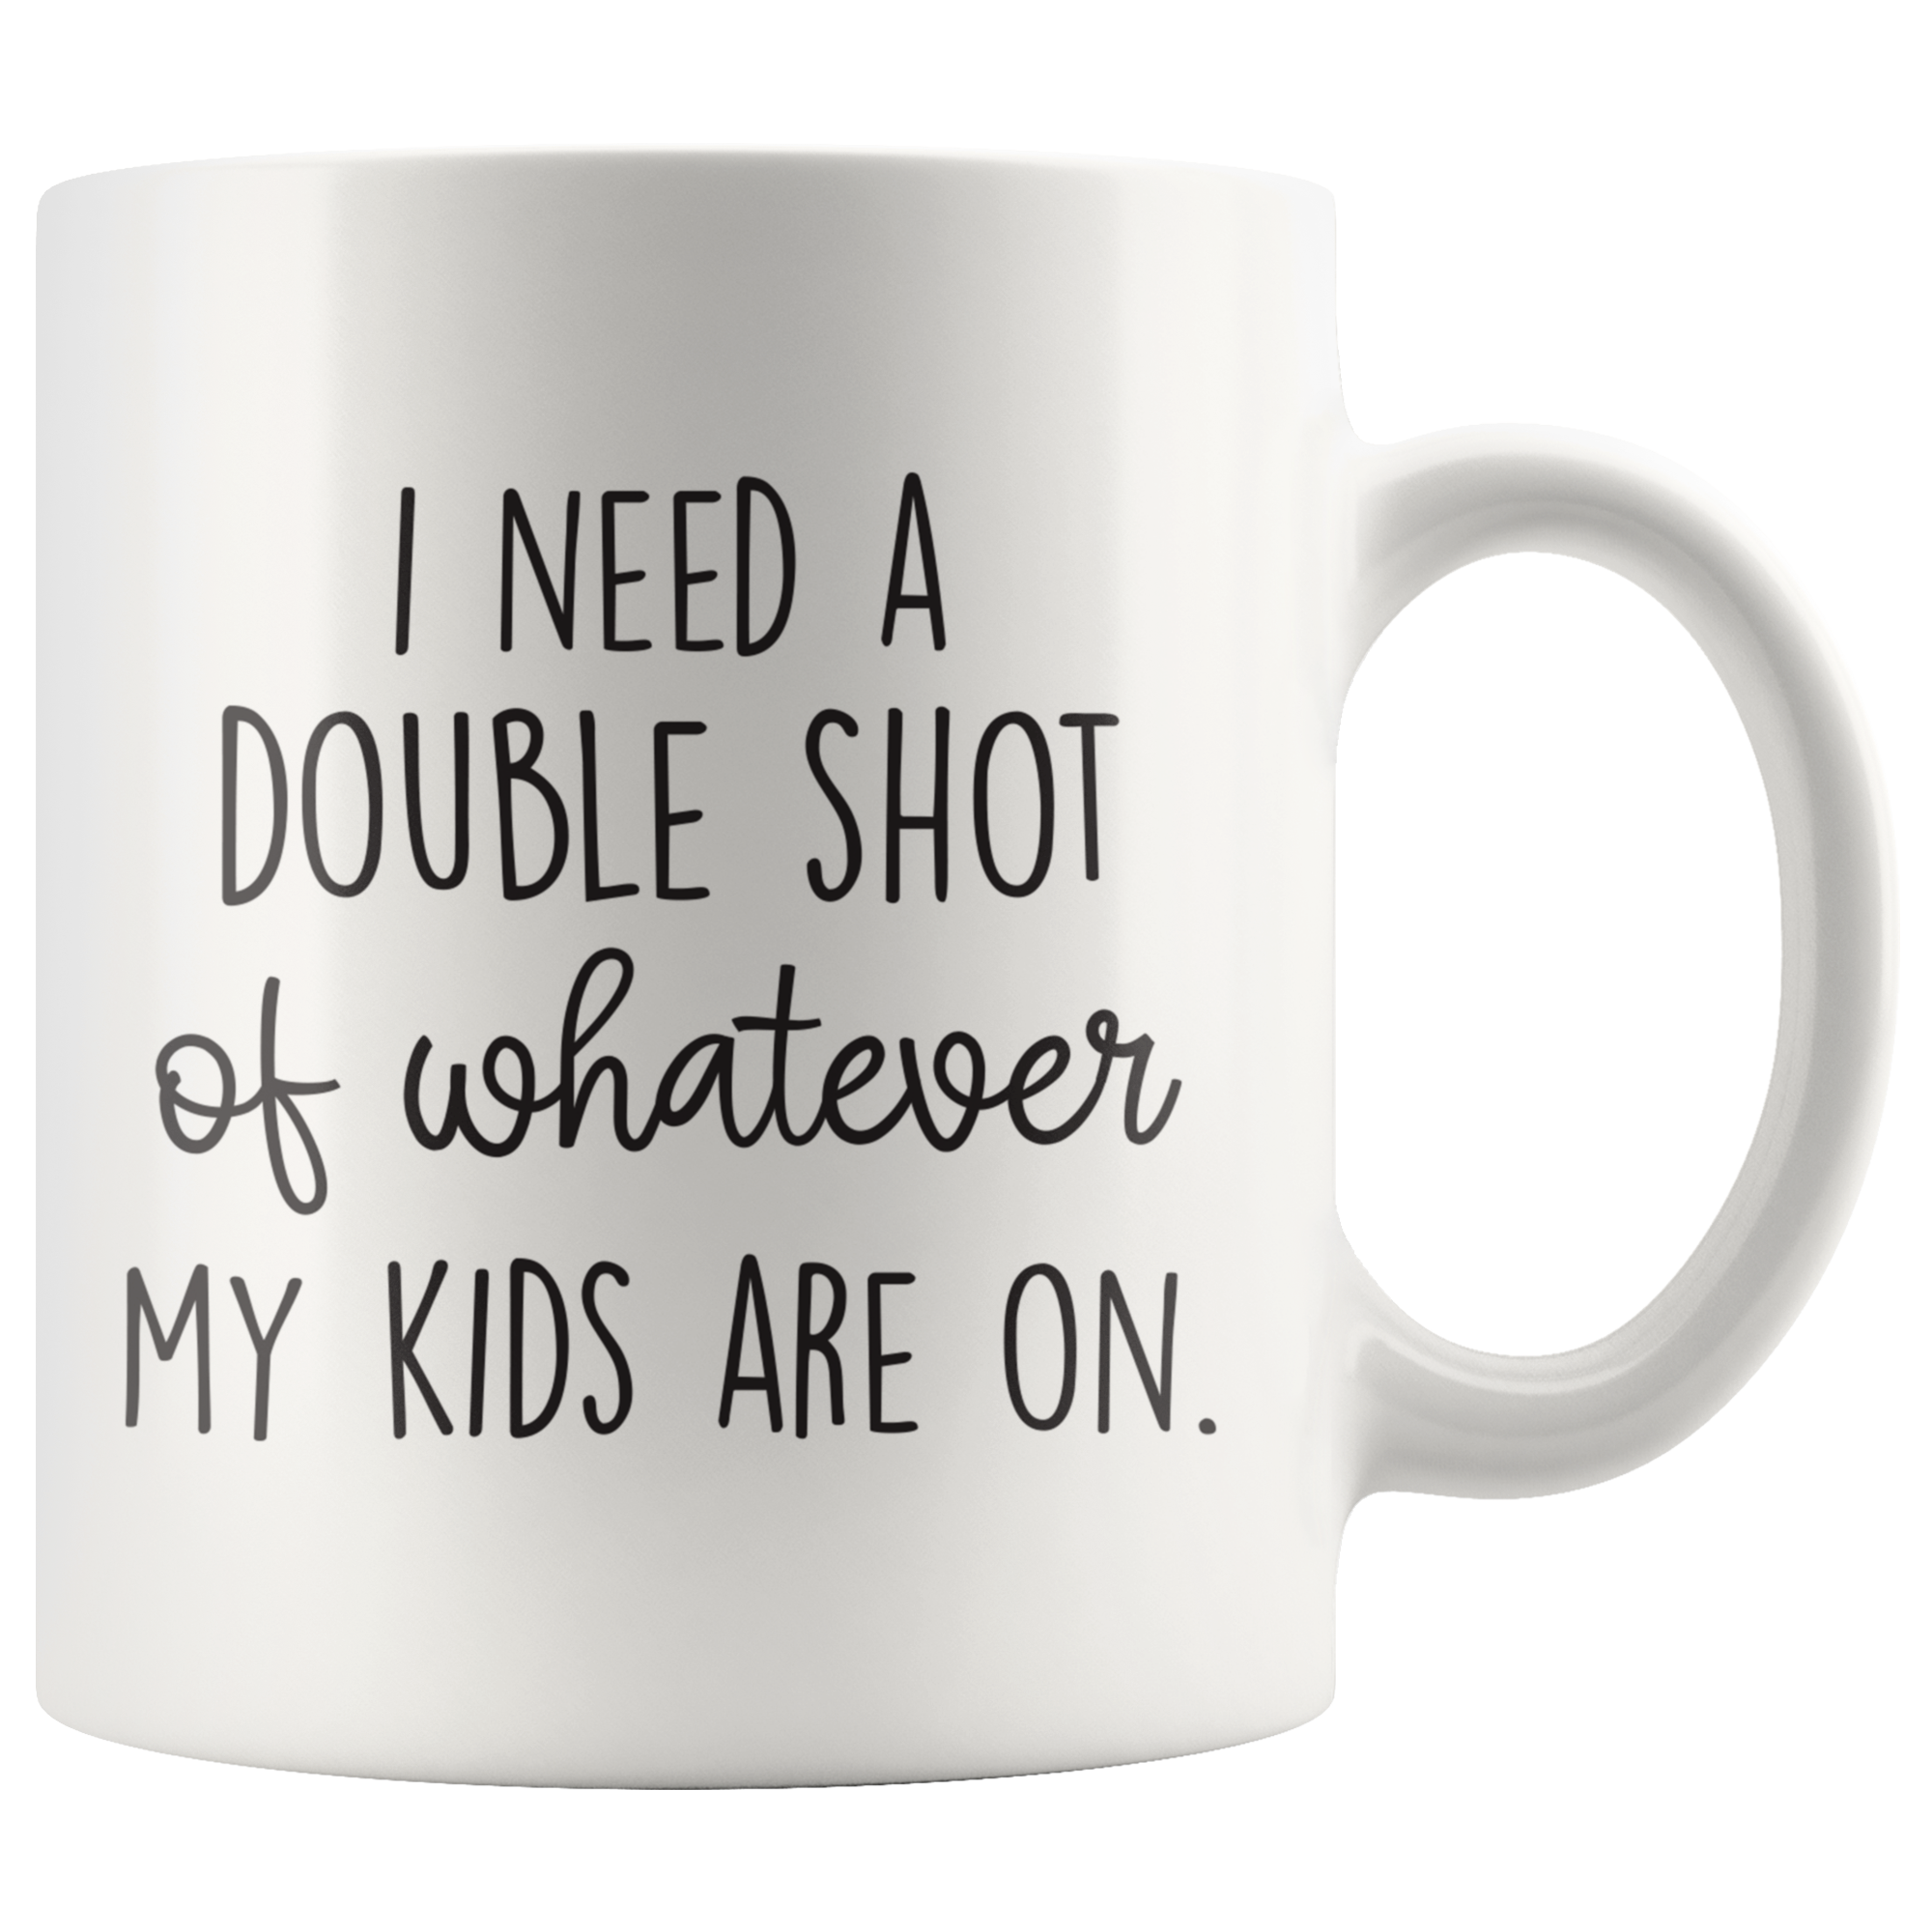 Need A Double Shot Coffee Mug